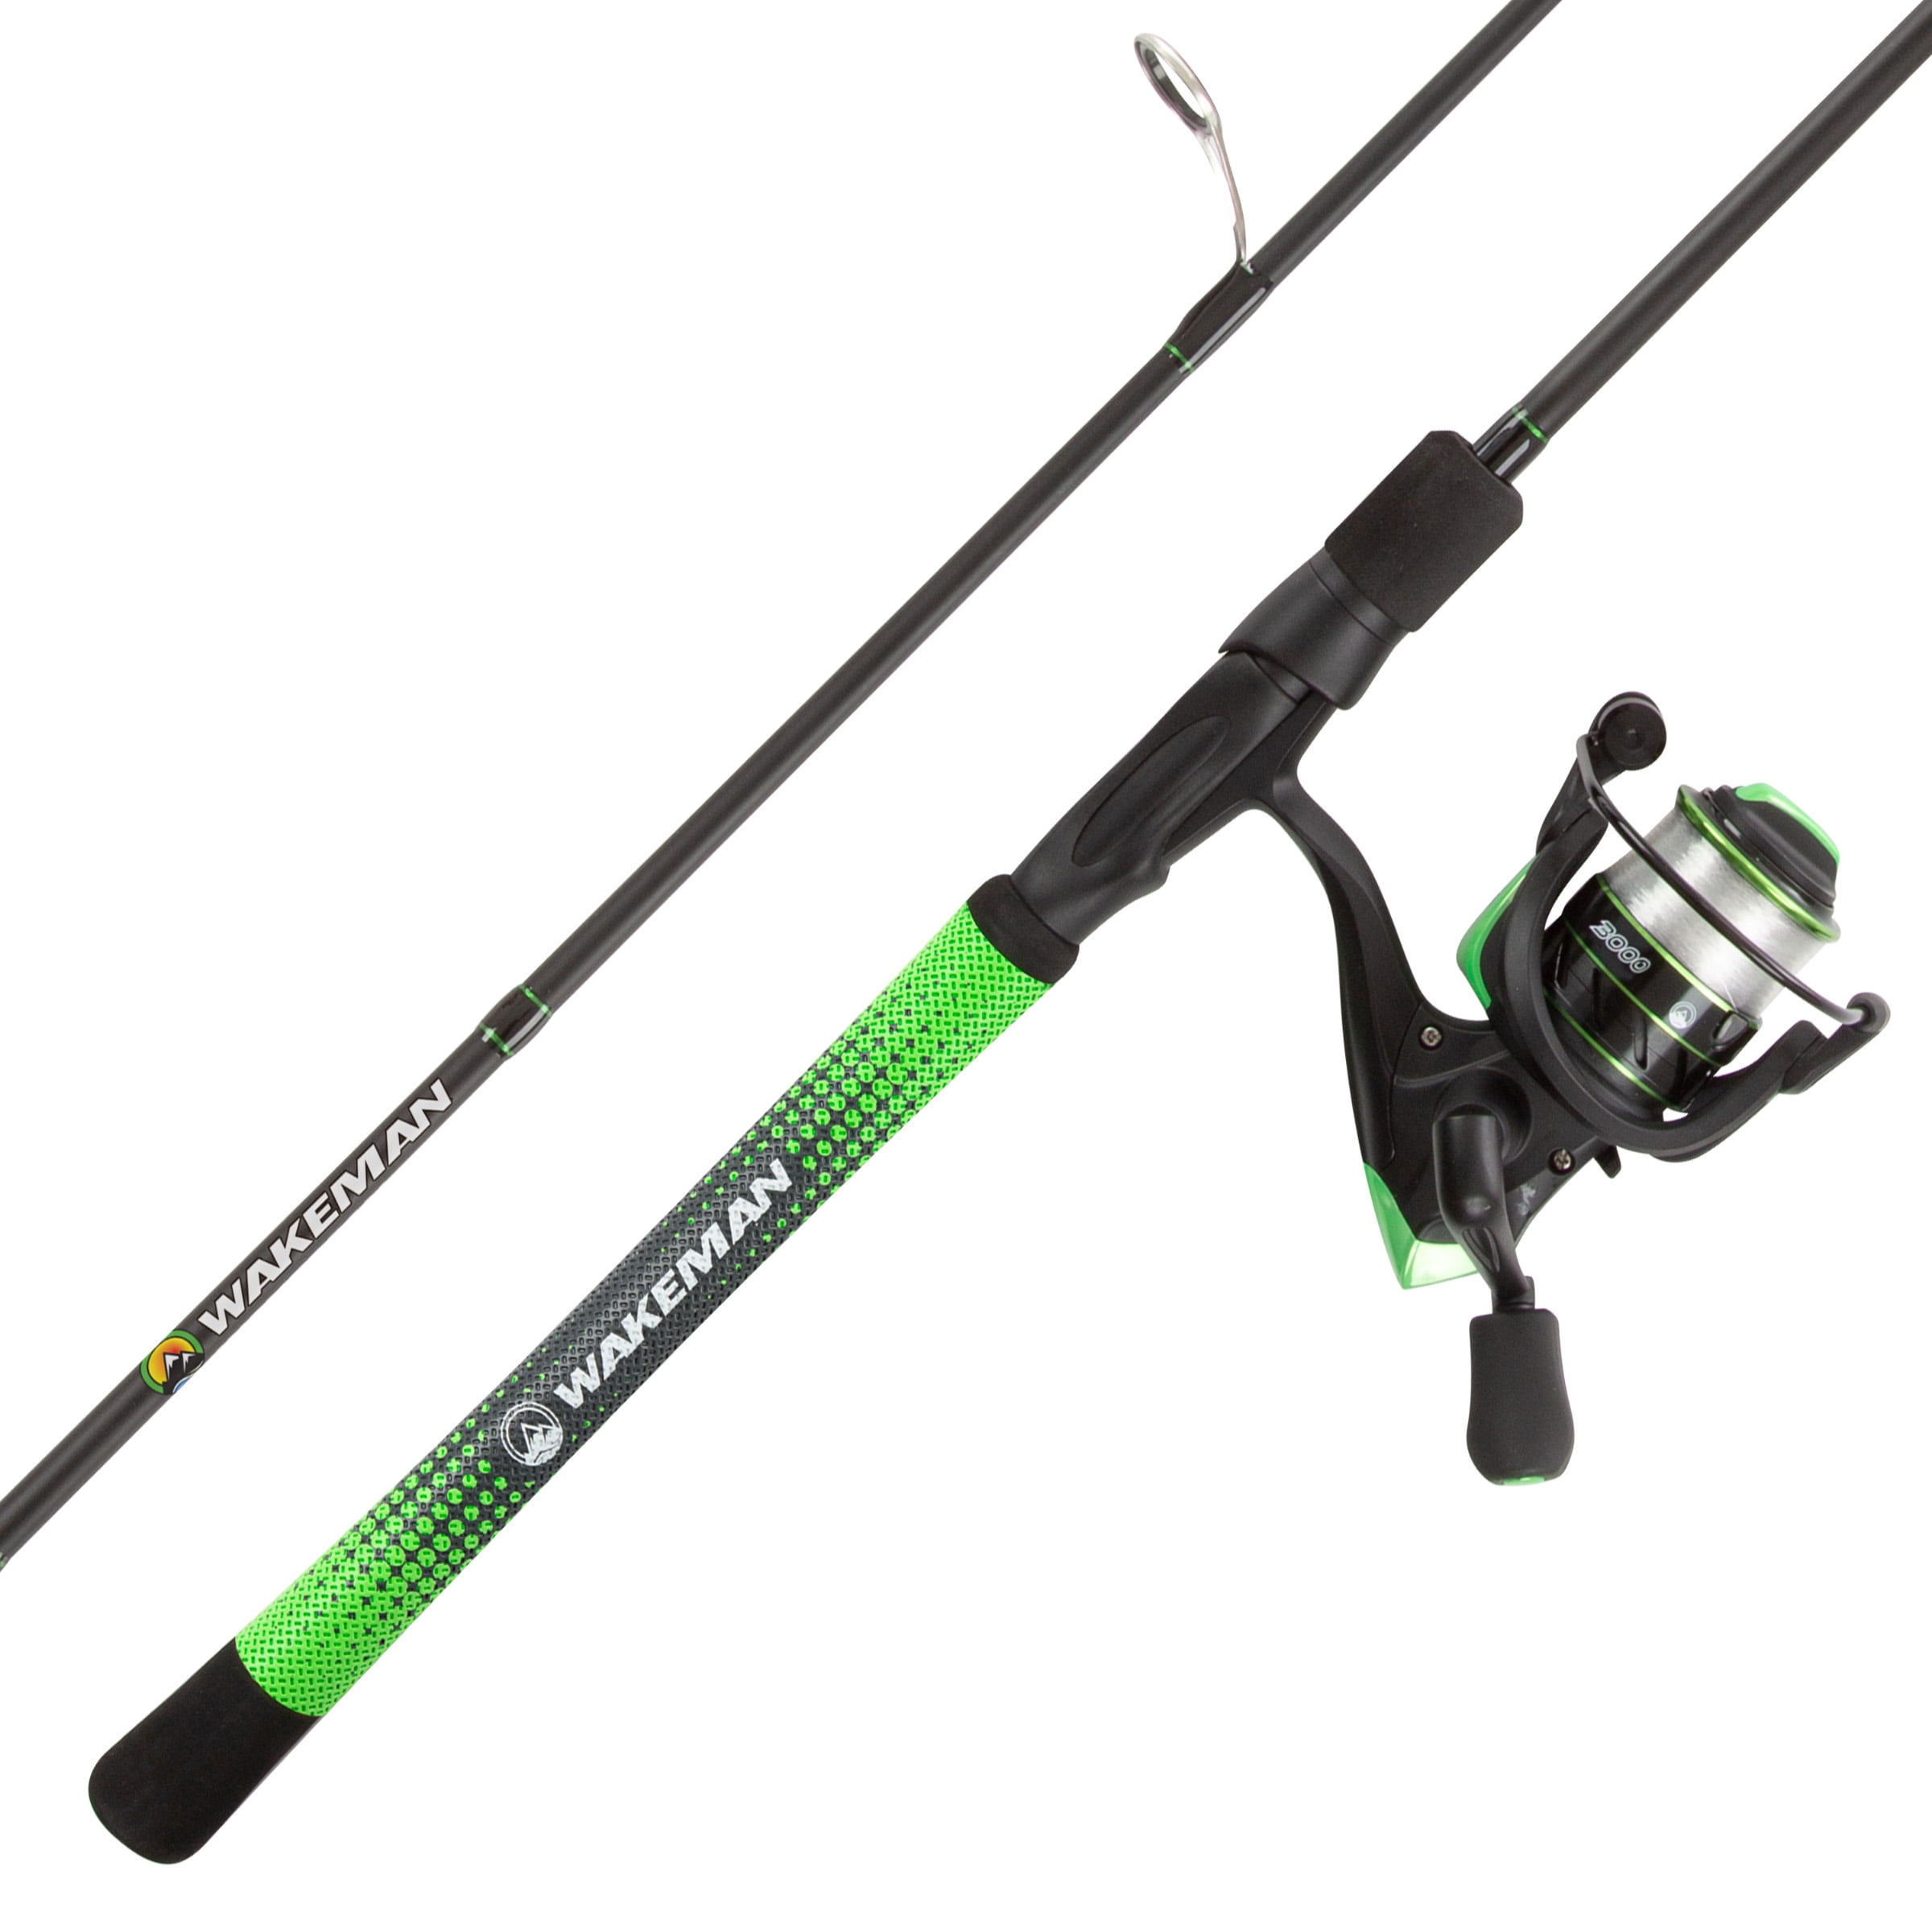 Buy Handle Grip For Fishing Rod online